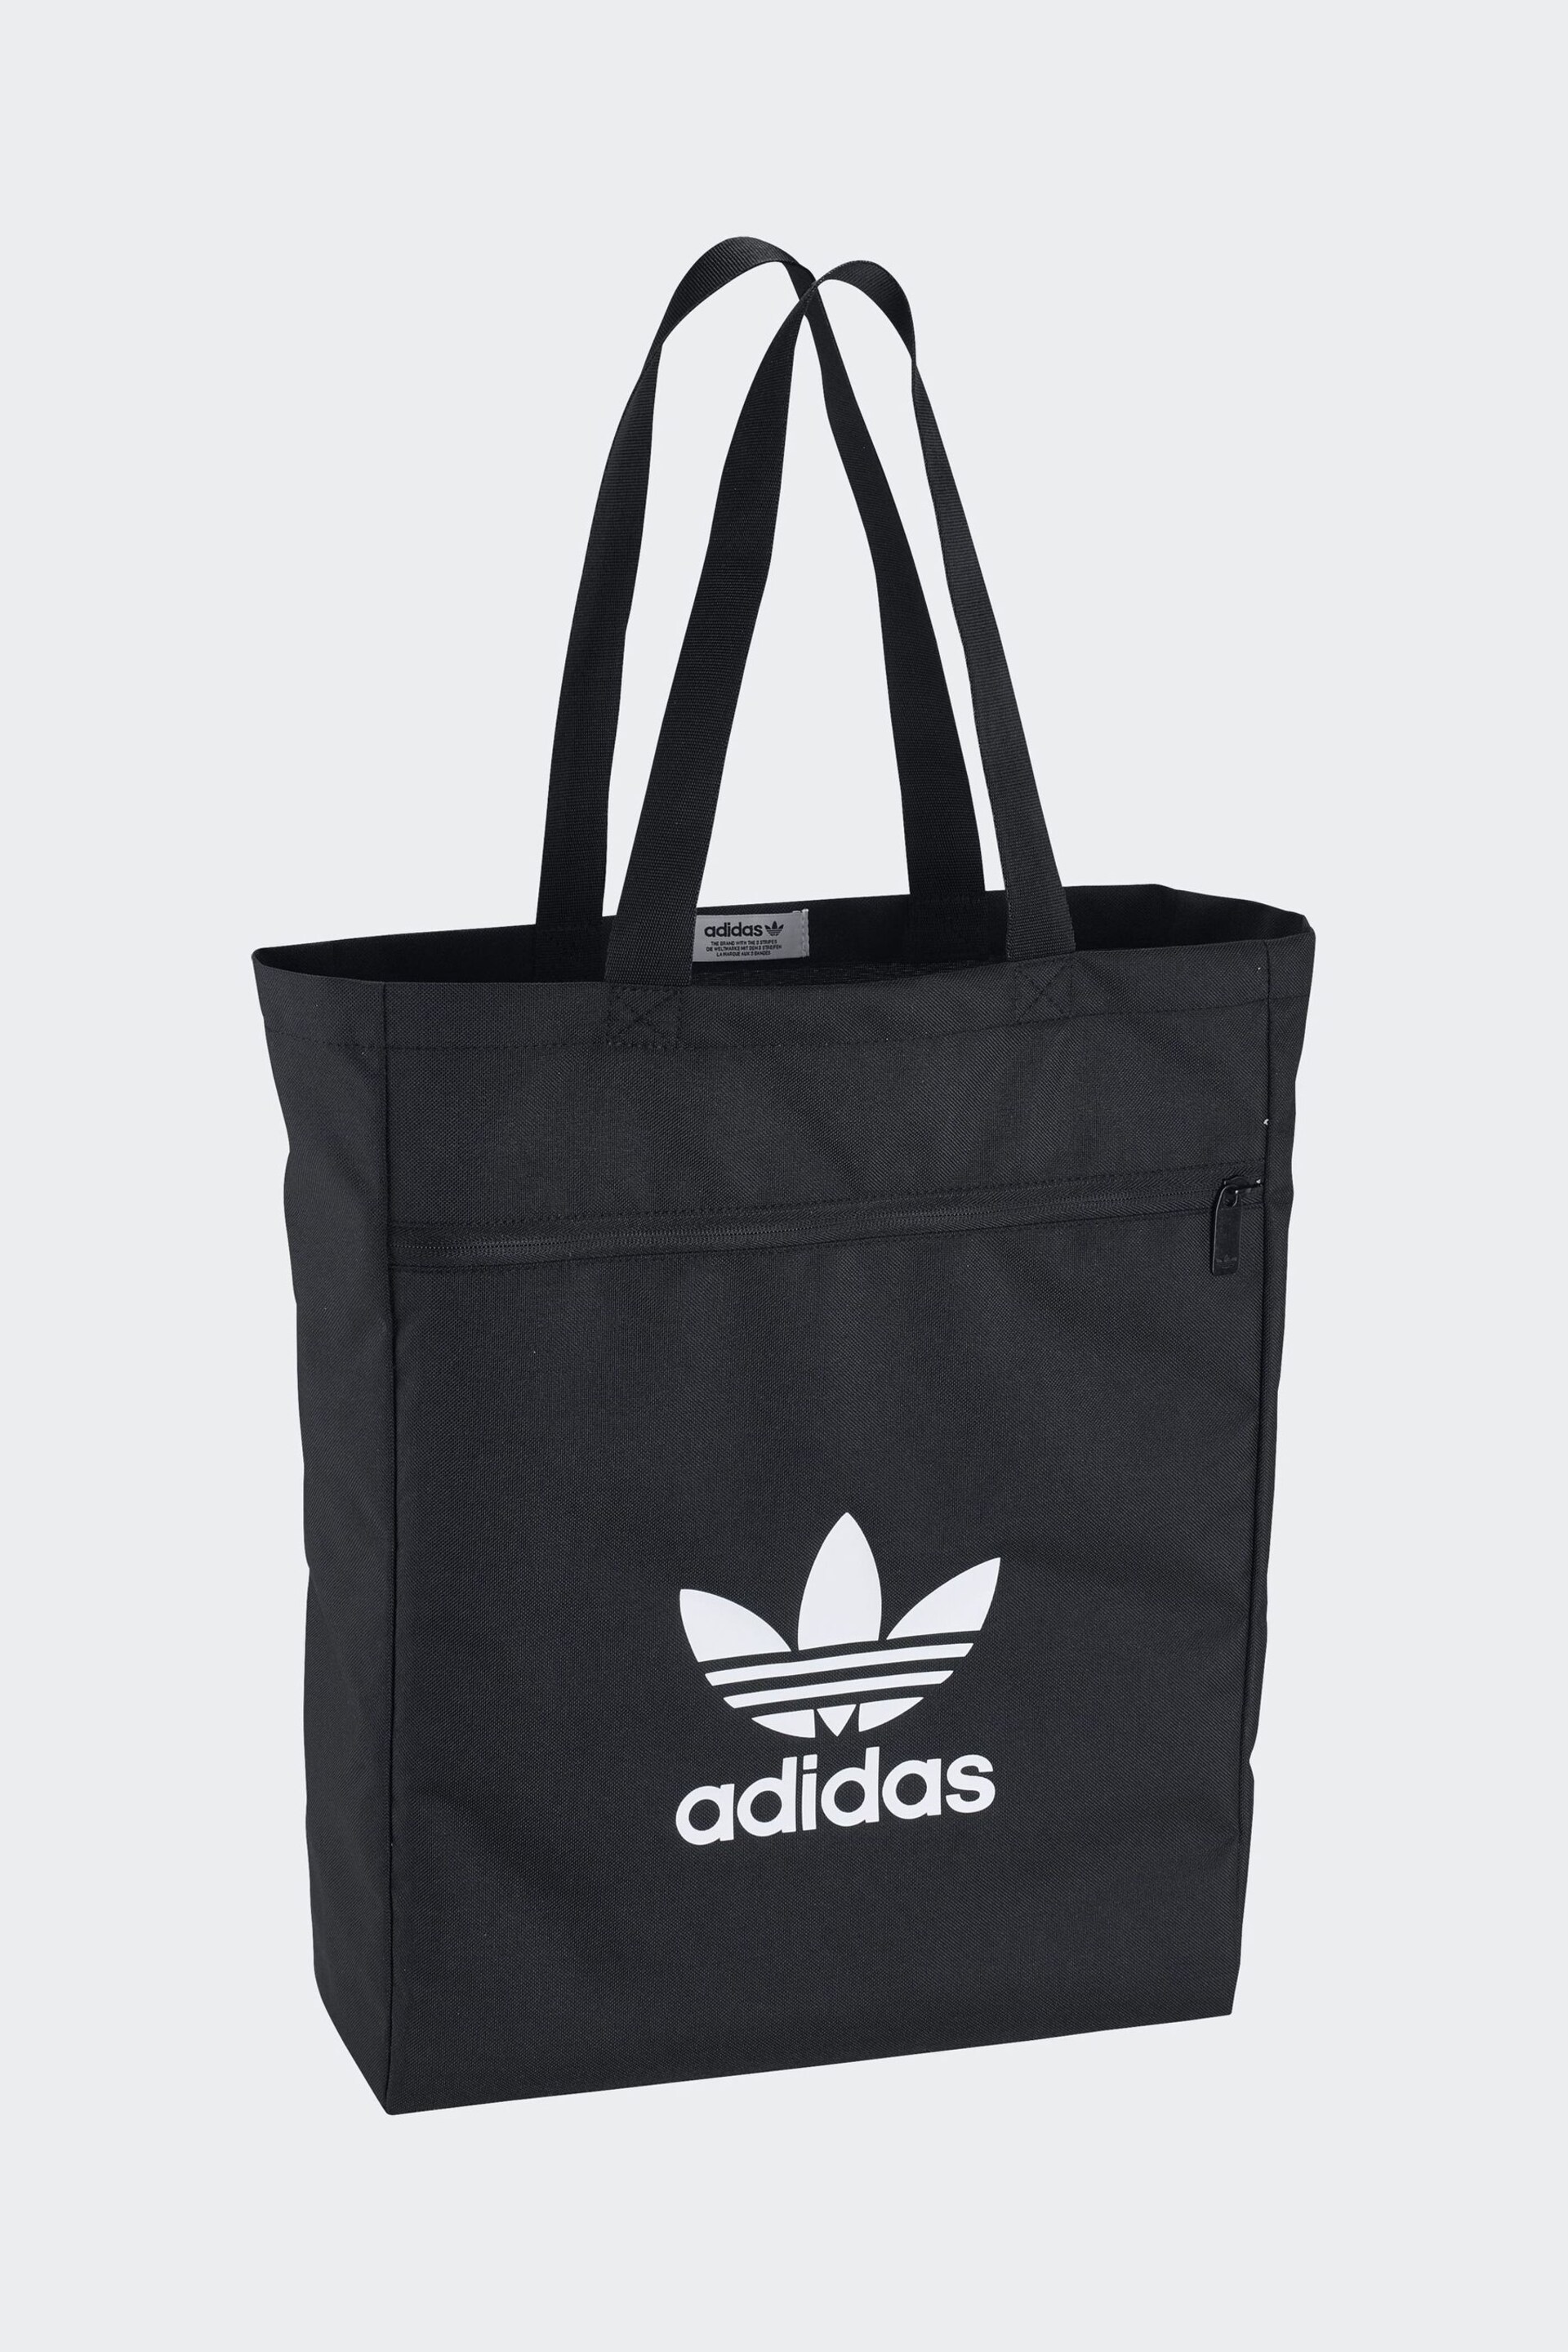 adidas Originals Adicolor Classic Shopper Black Bag - Image 1 of 6